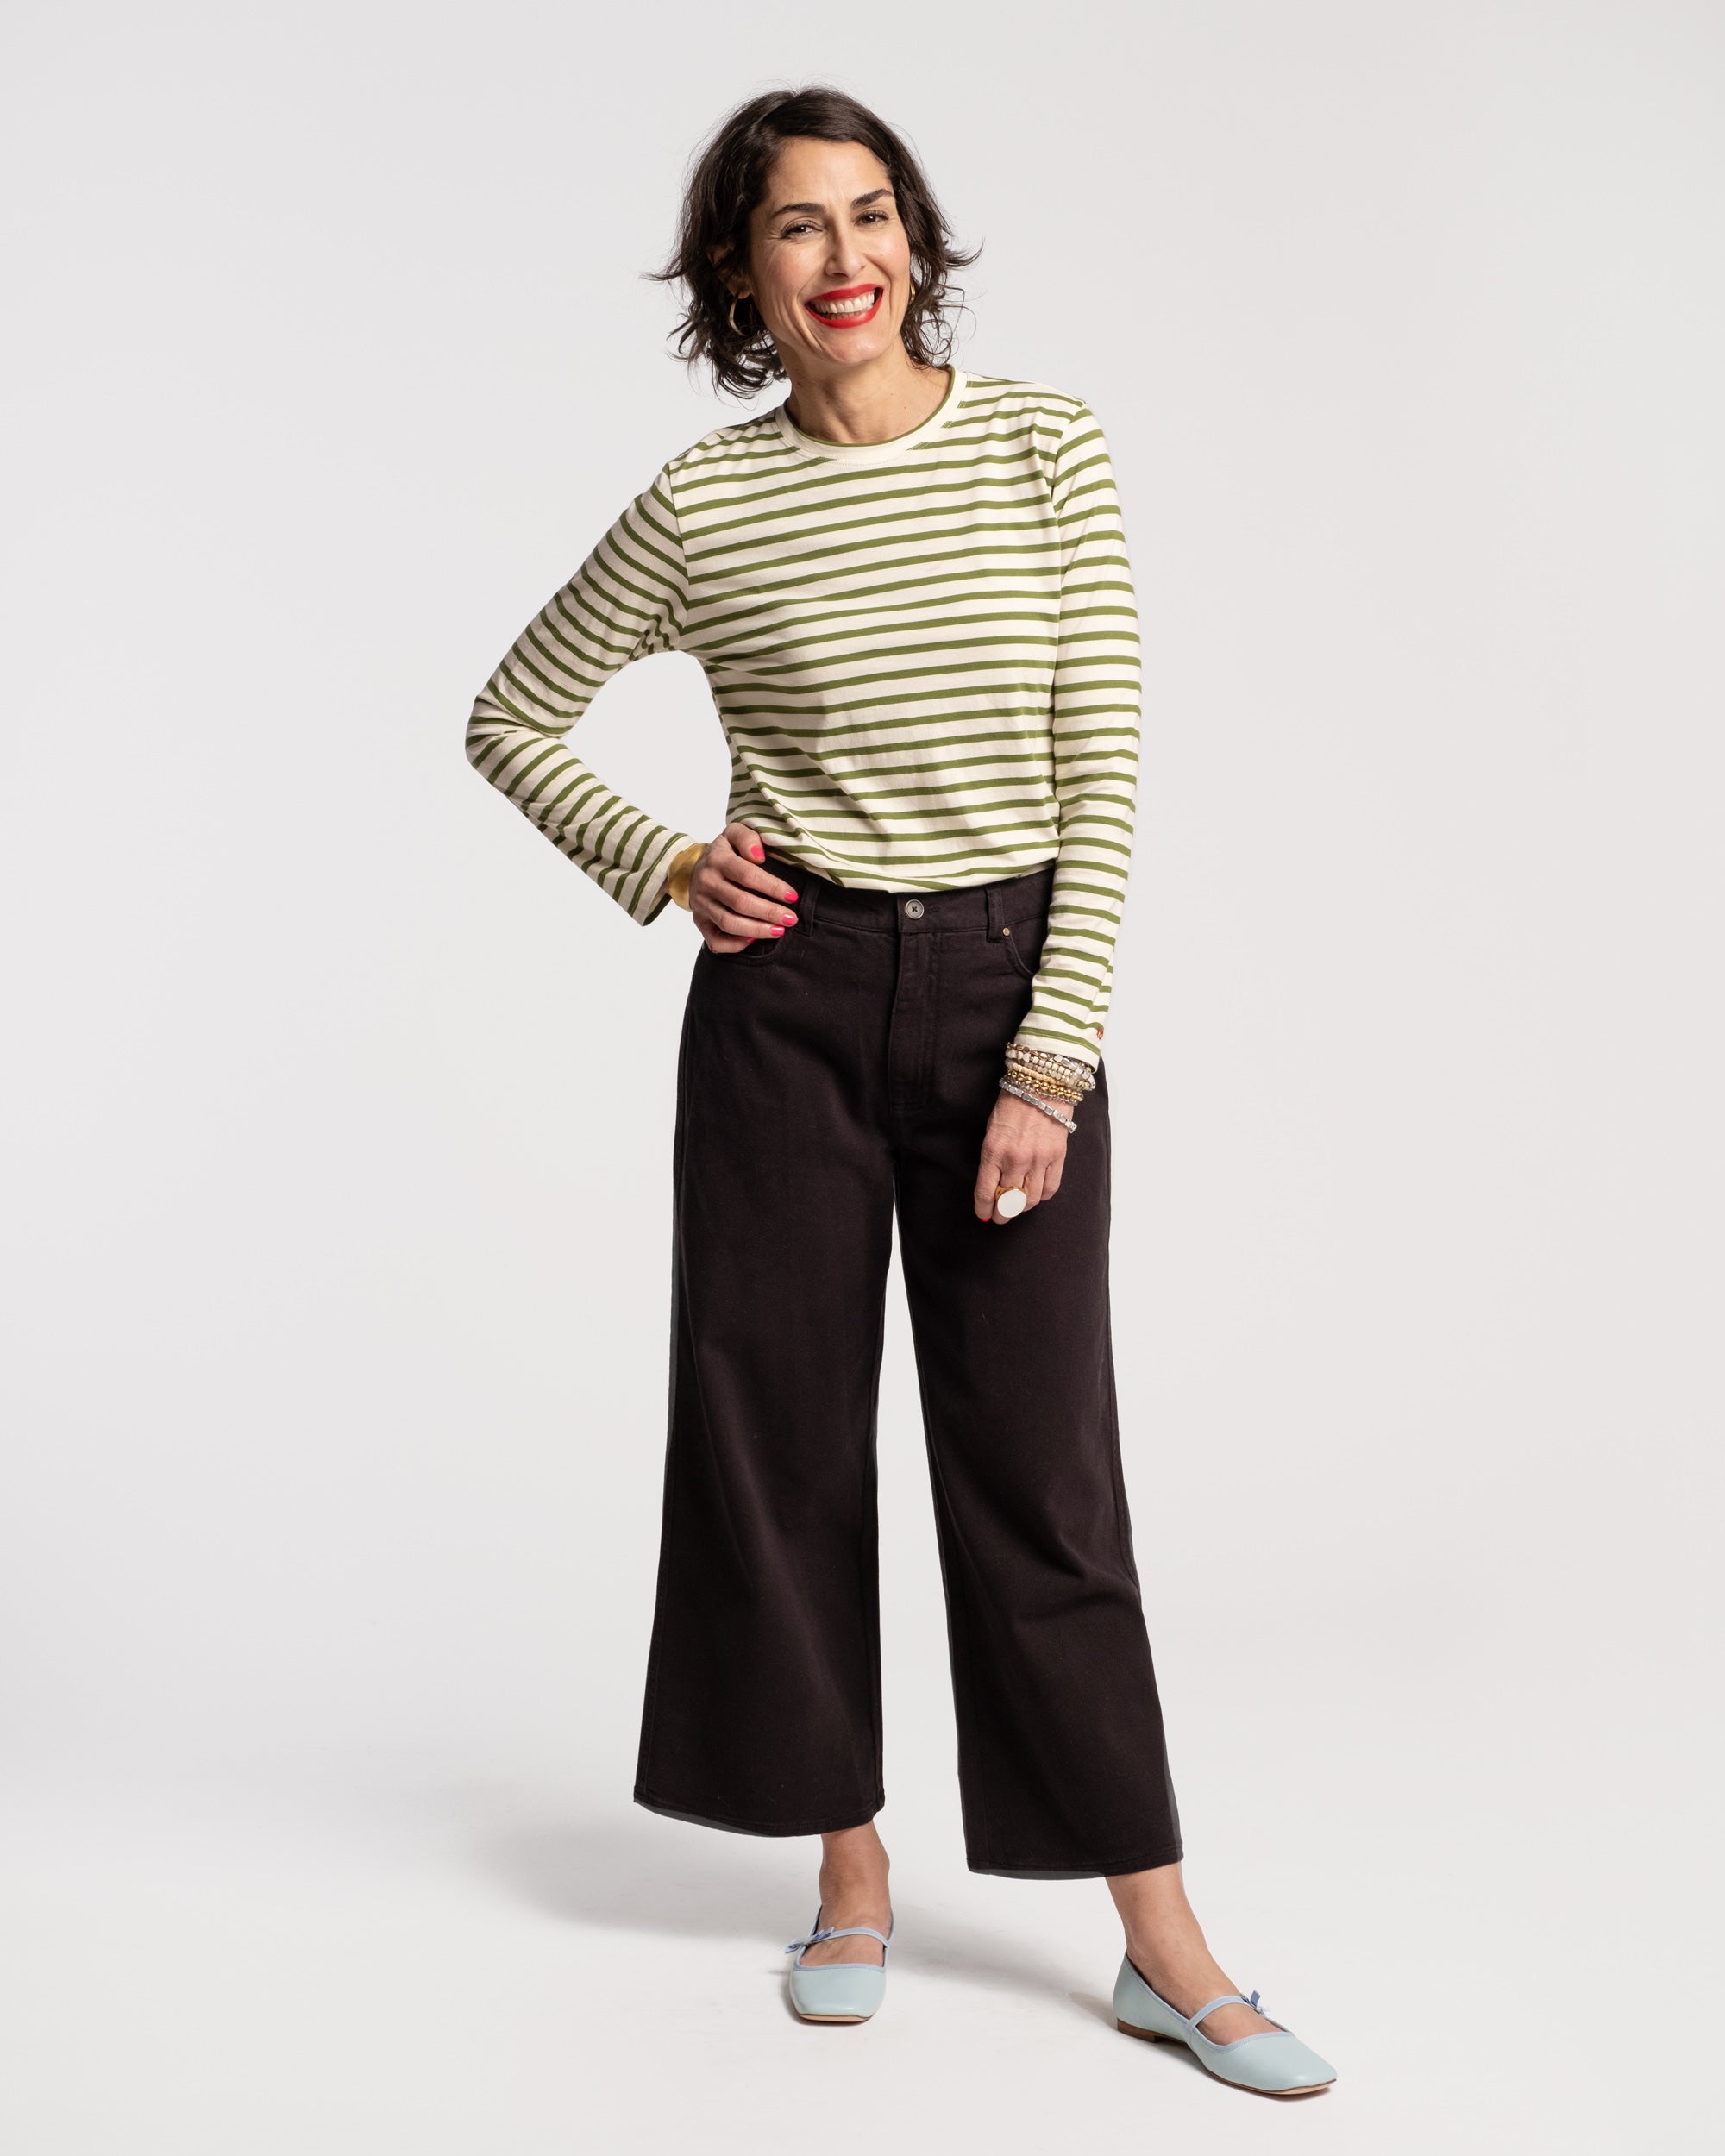 Stylish & Classic Pants | Frances Valentine